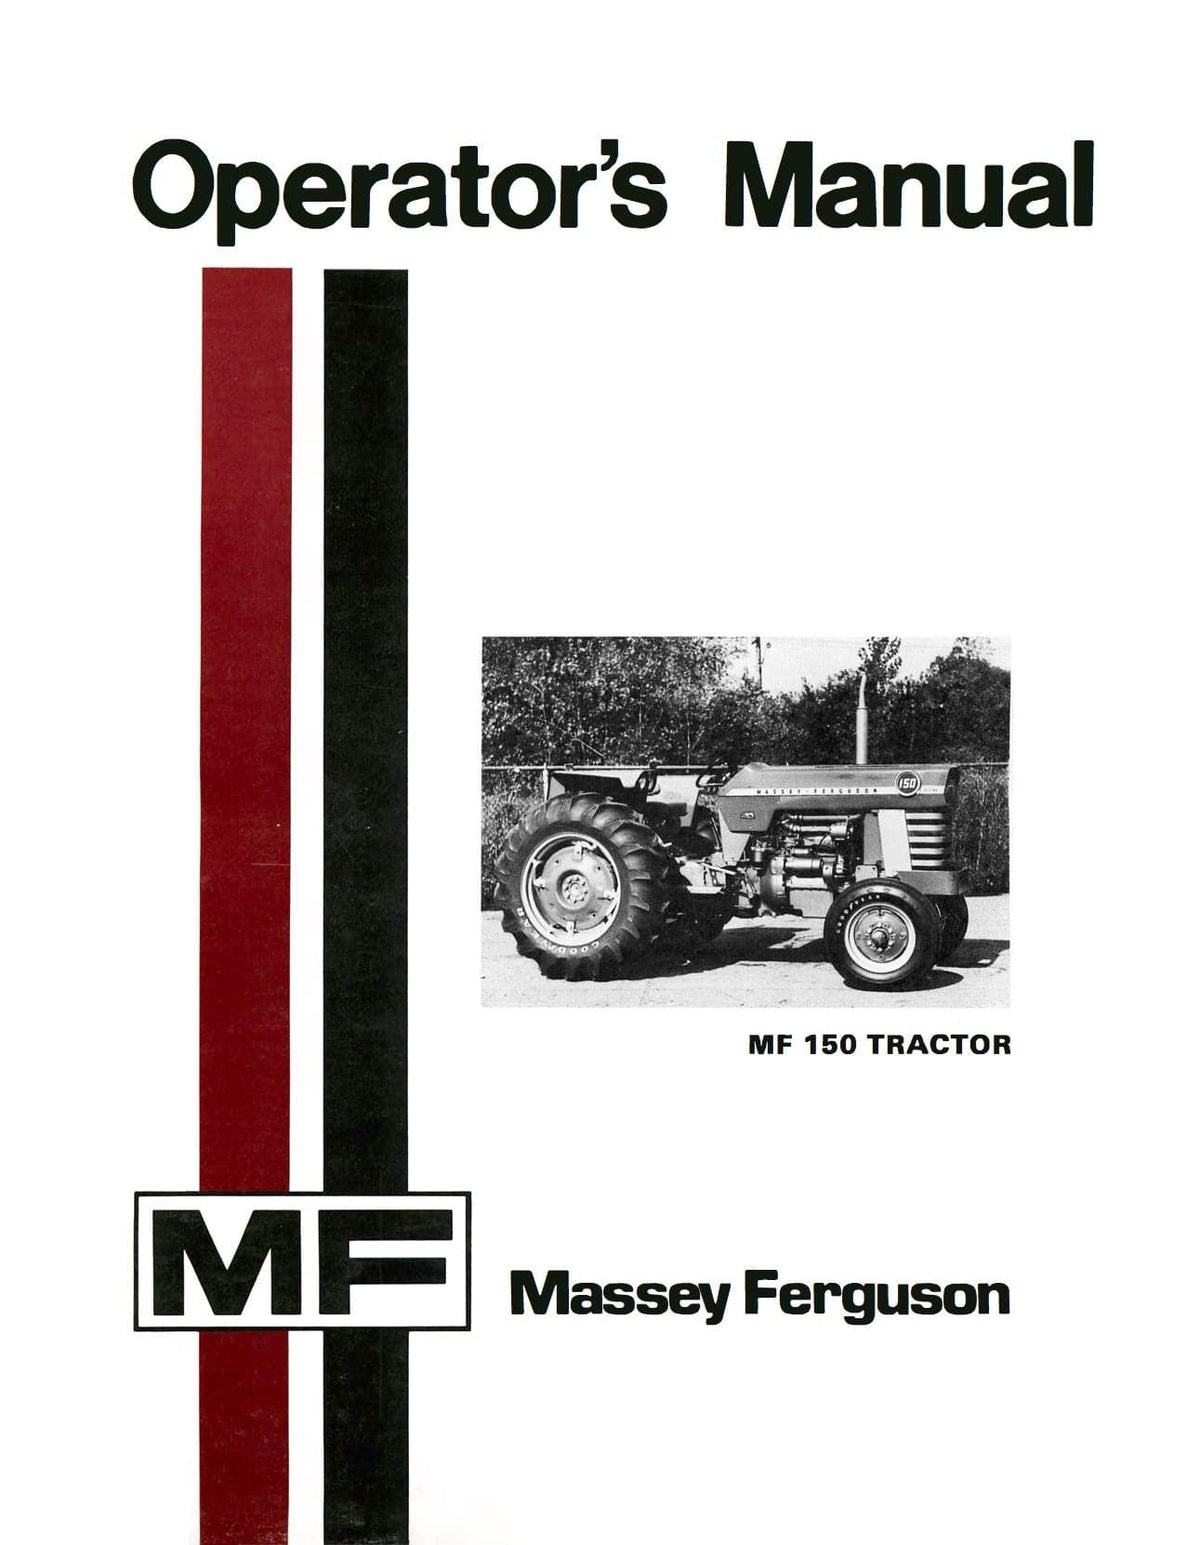 Massey Ferguson MF 150 Tractor - Operator's Manual - Ag Manuals - A Provider of Digital Farm Manuals - 1